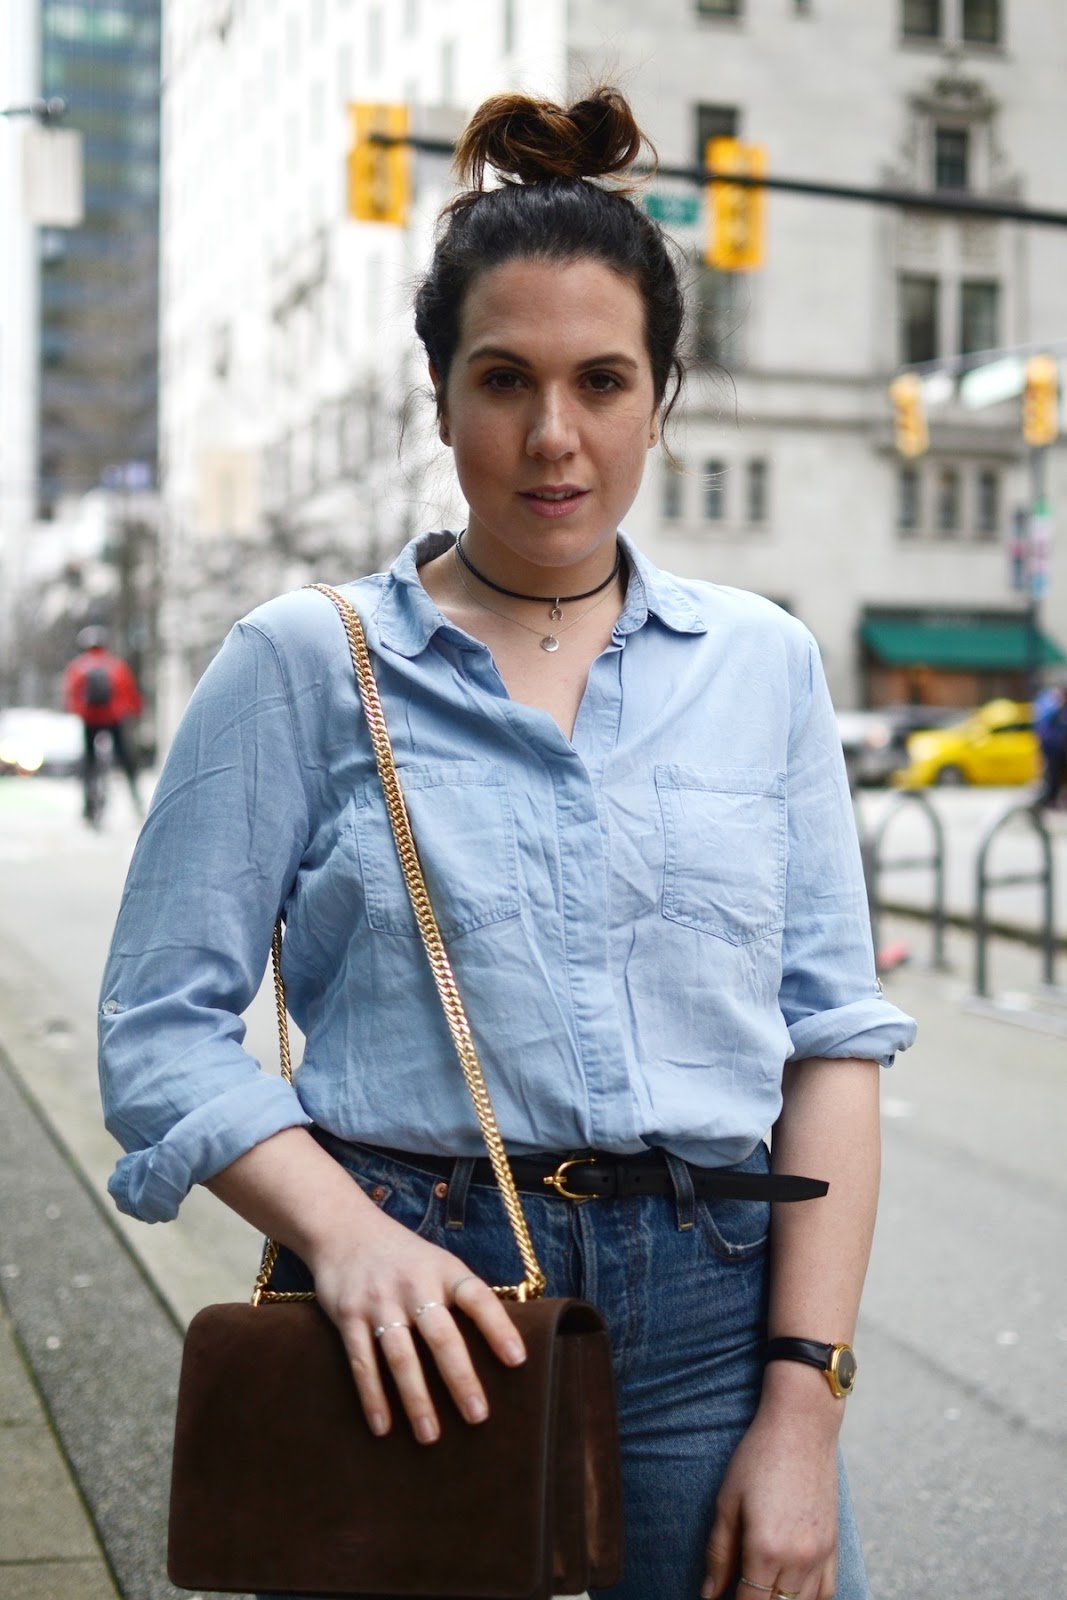 Denim outfit levis wedgie jeans AGNEEL sophie bag vancouver fashion blogger 4